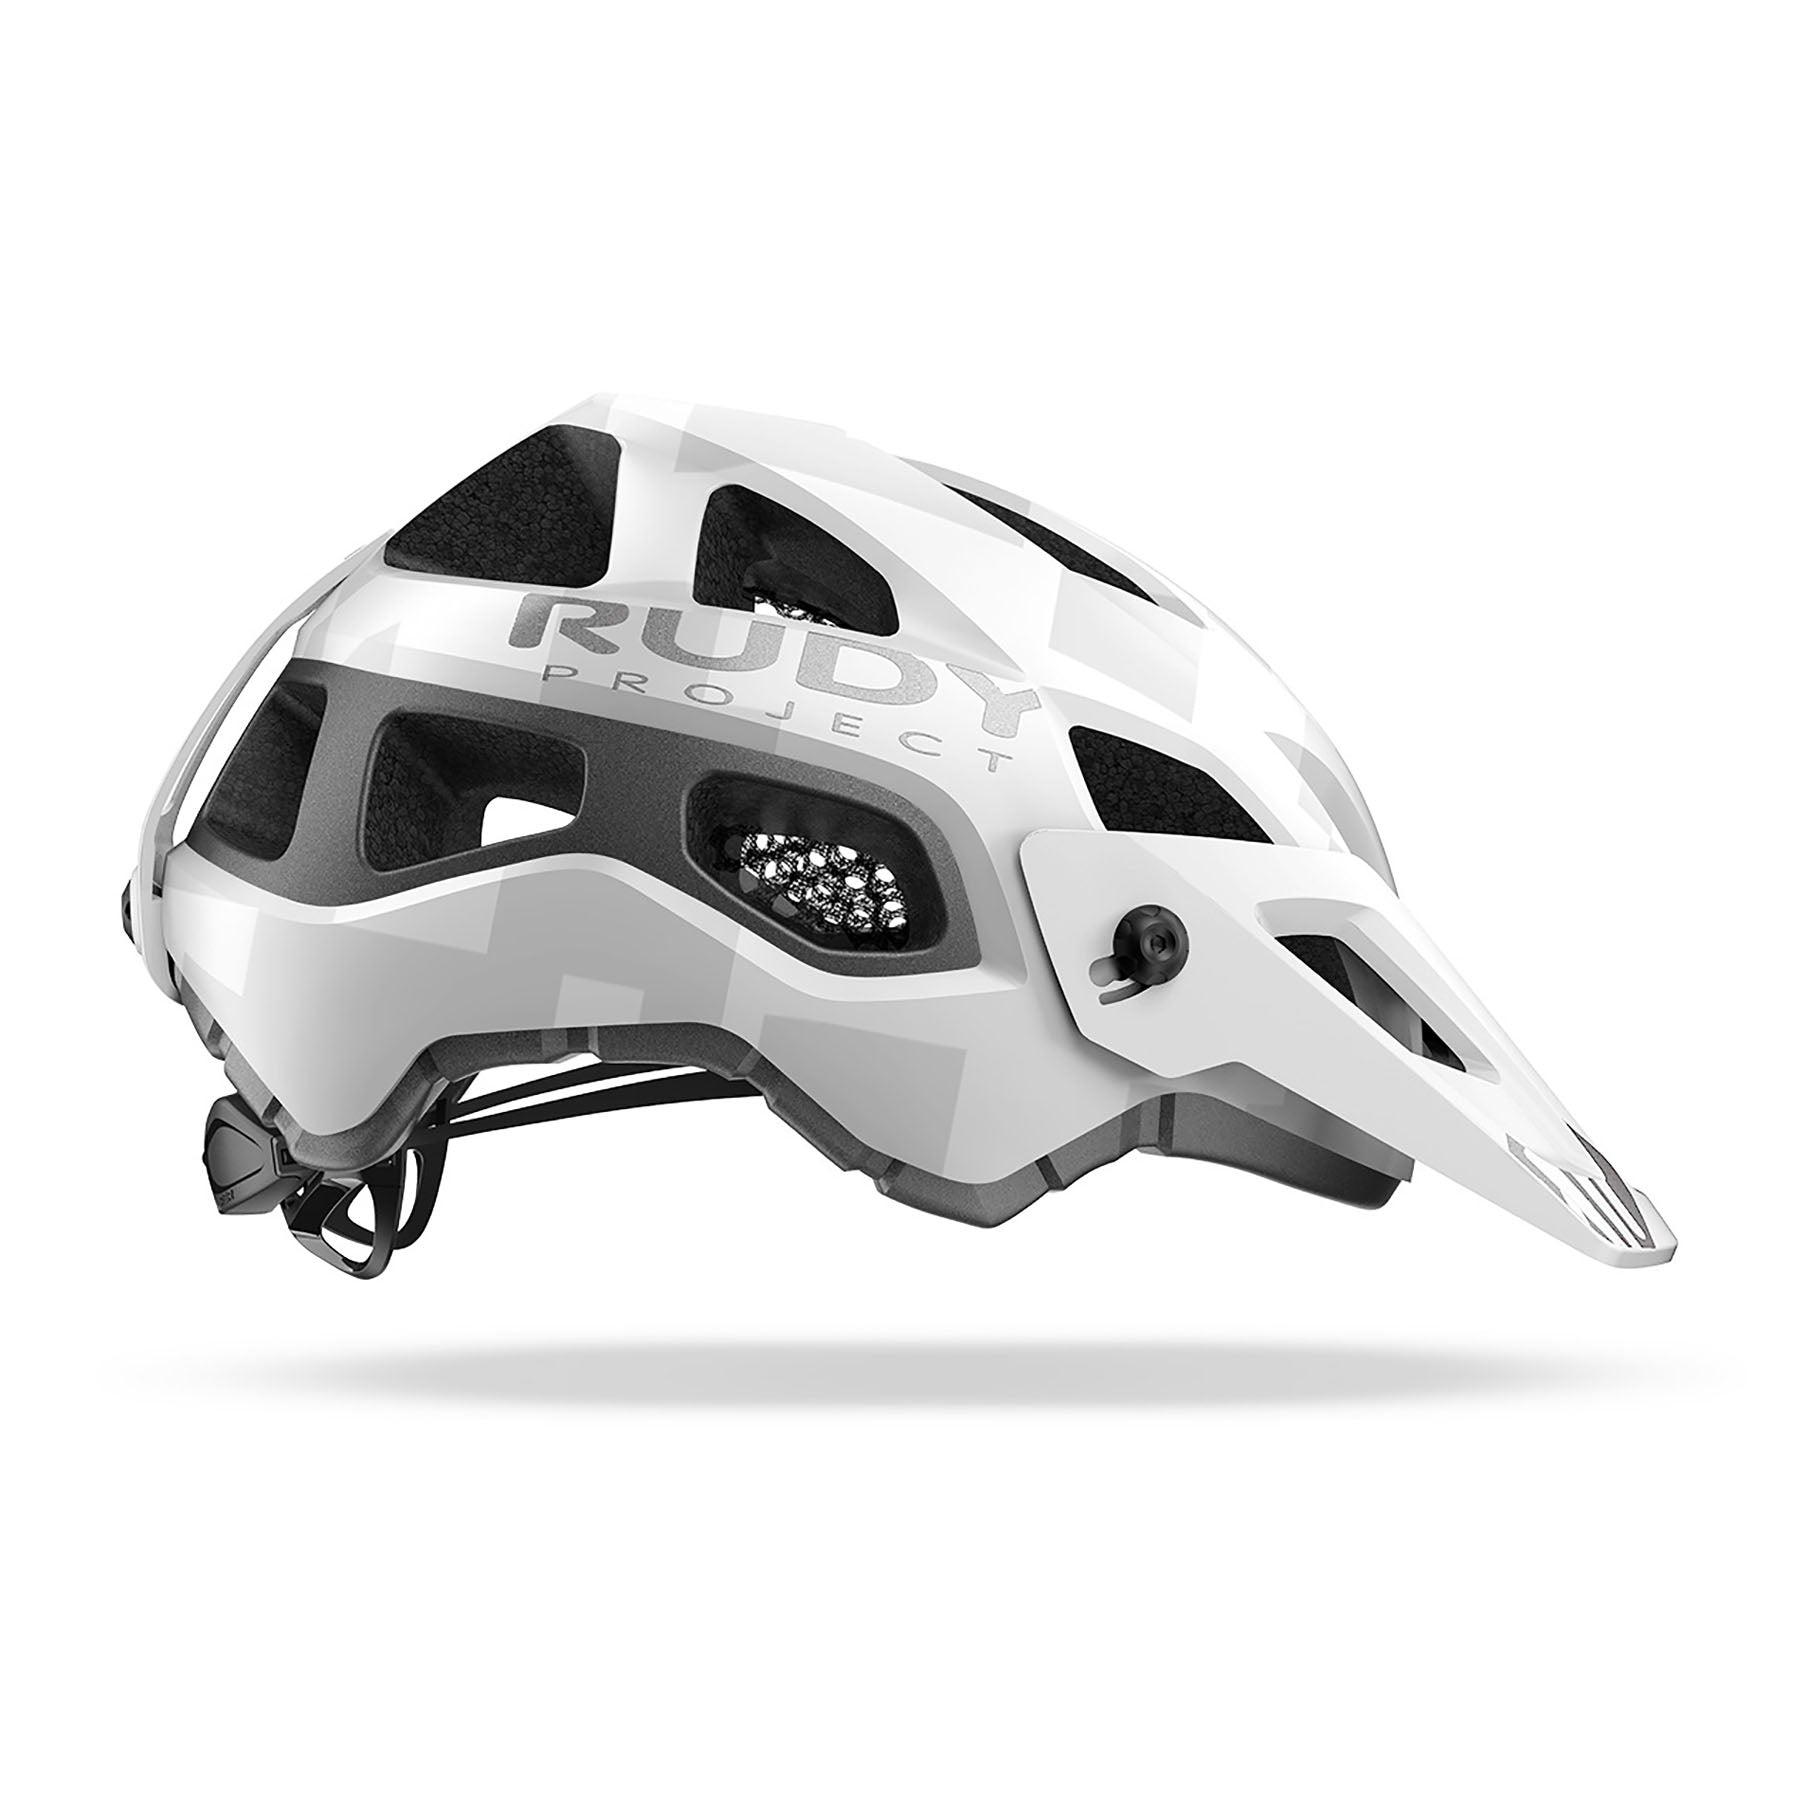 Crossway Helmet - Rudy Project - Ninja Mountain Bike Skills